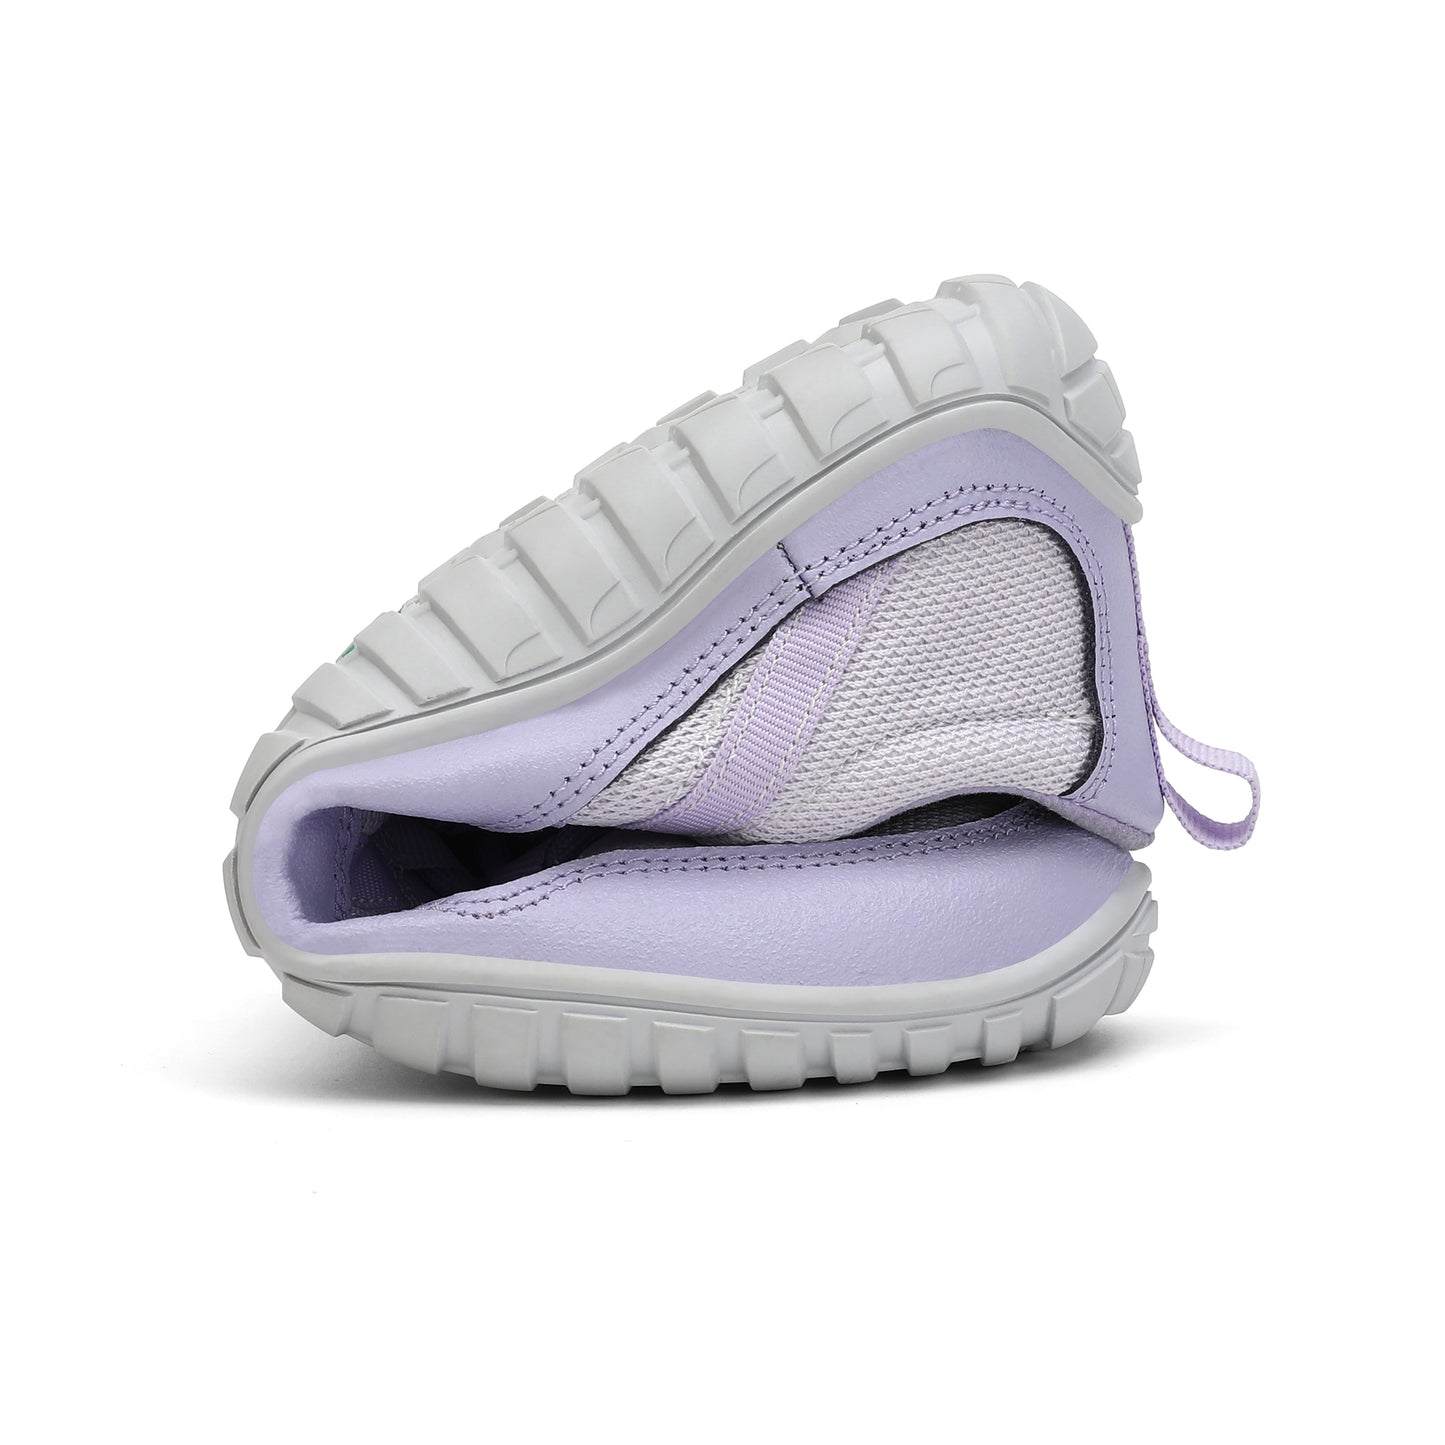 Forestep I - Purpura - Barefoot shoes